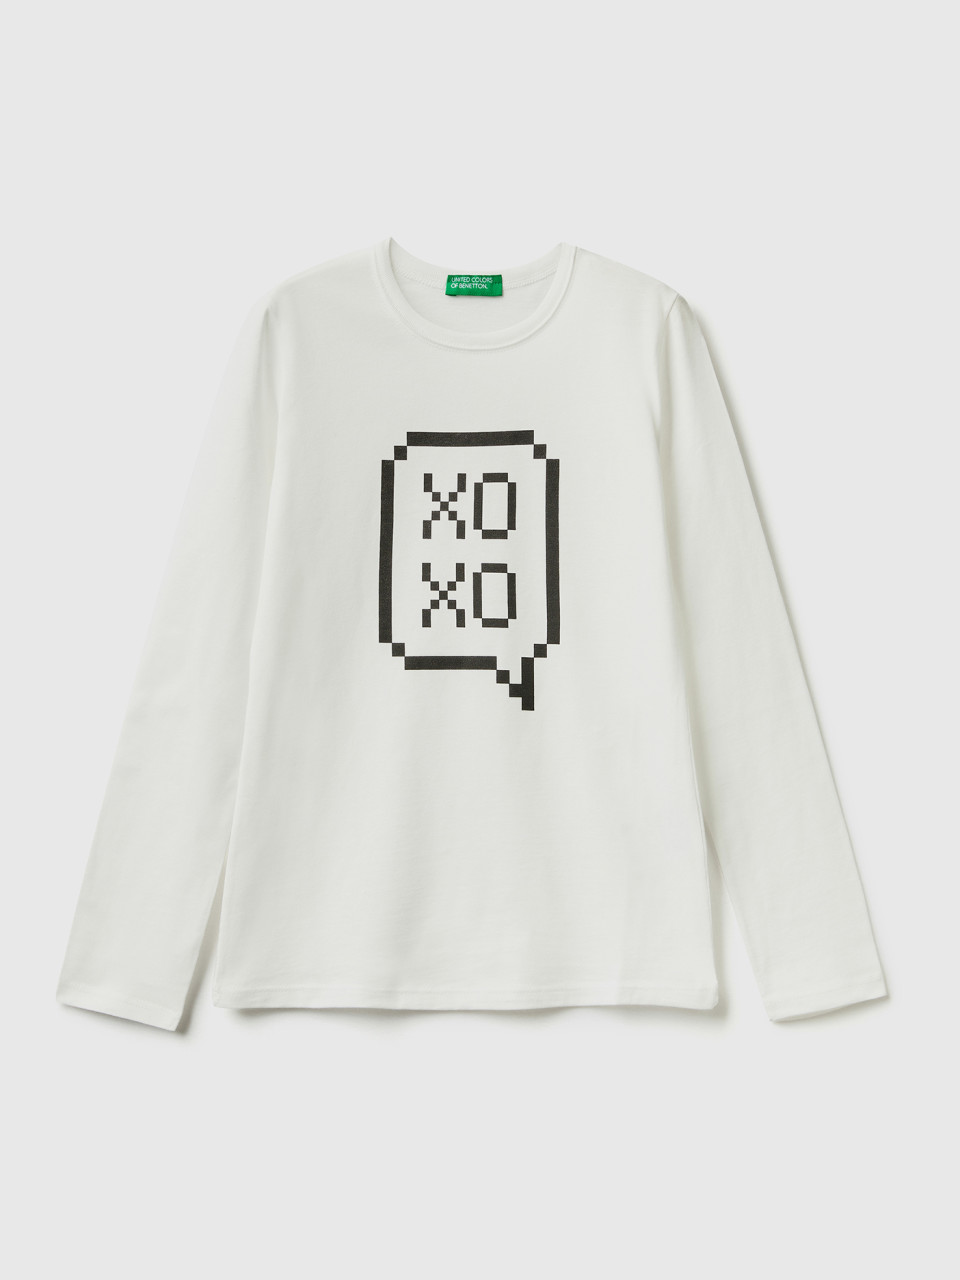 Benetton, Long Sleeve 100% Cotton T-shirt, White, Kids